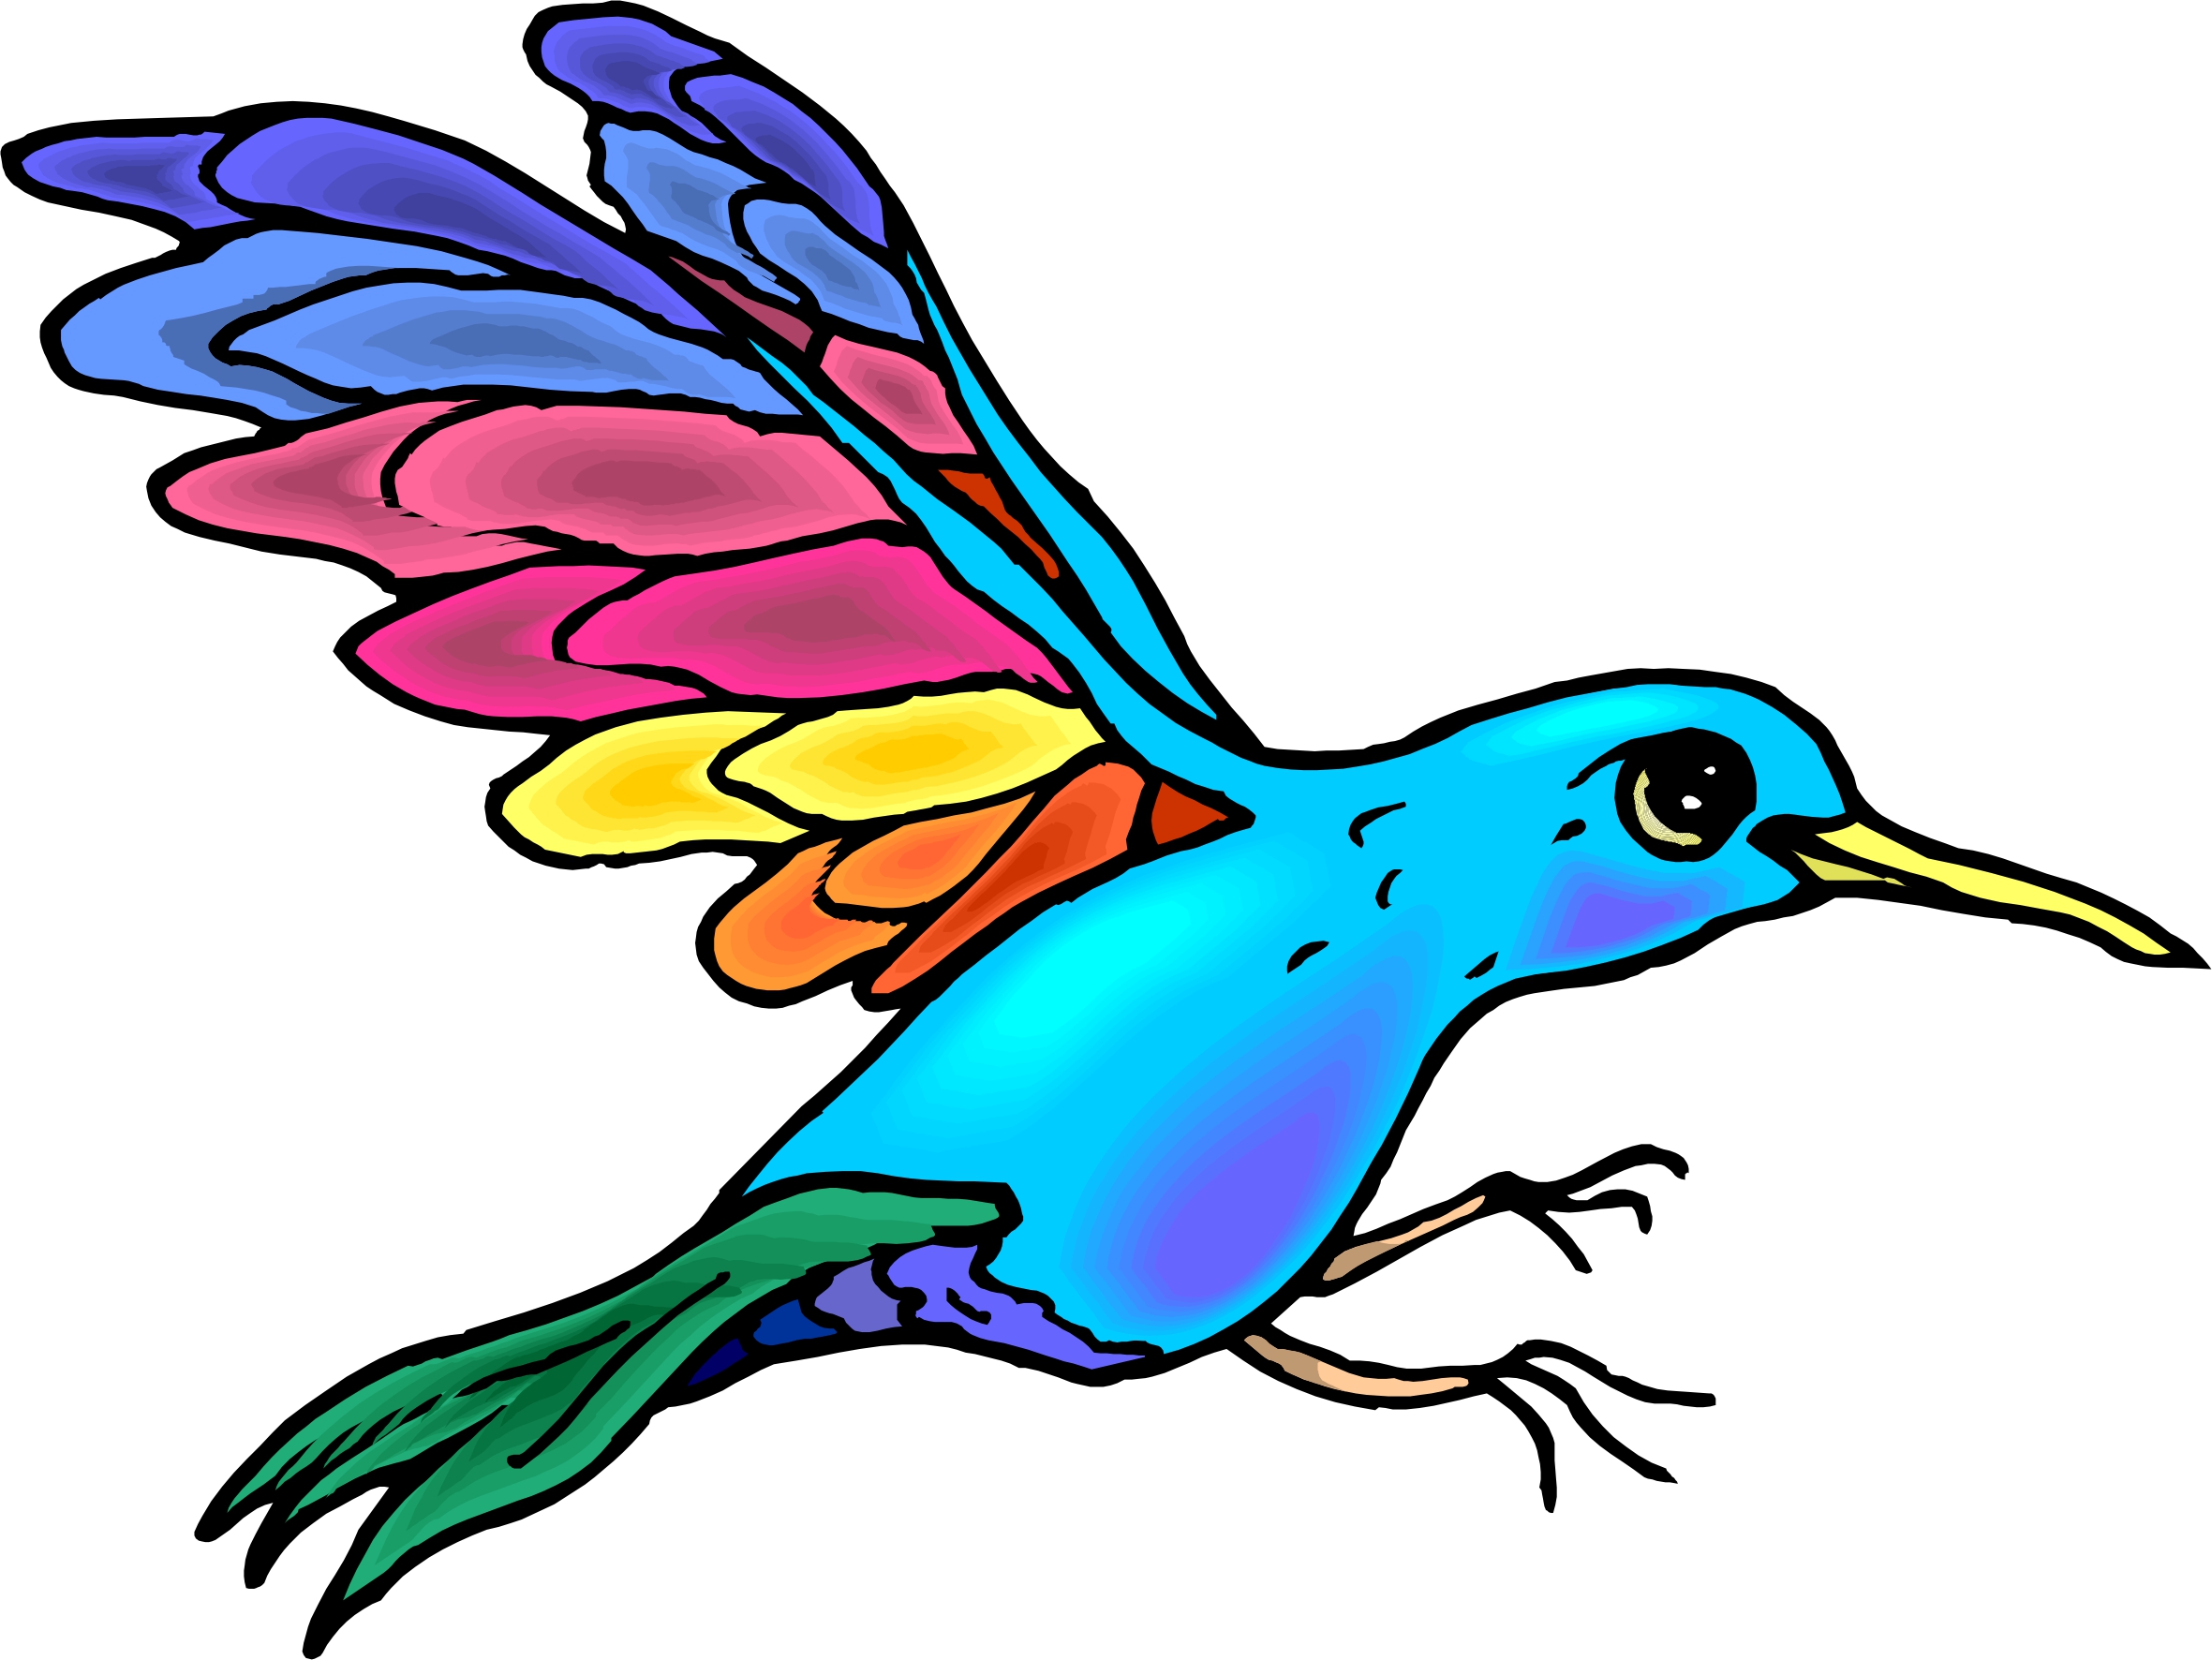 Free Cartoon Birds Images, Download Free Cartoon Birds Images png images, Free ClipArts on